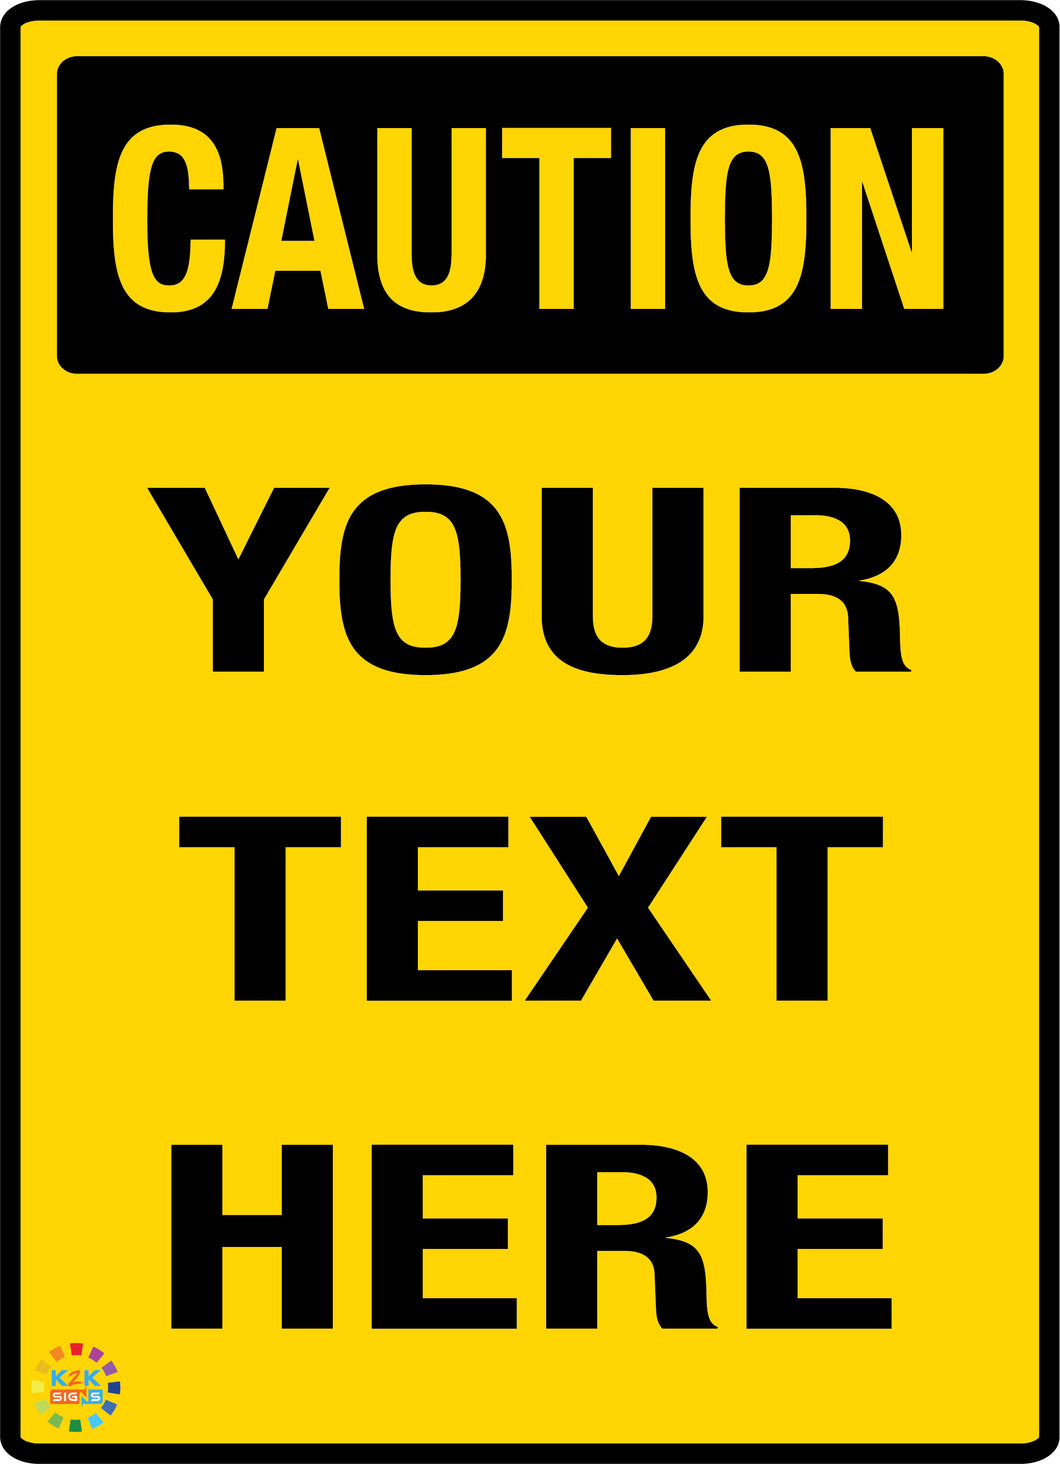 Caution <br/> Custom Text Sign